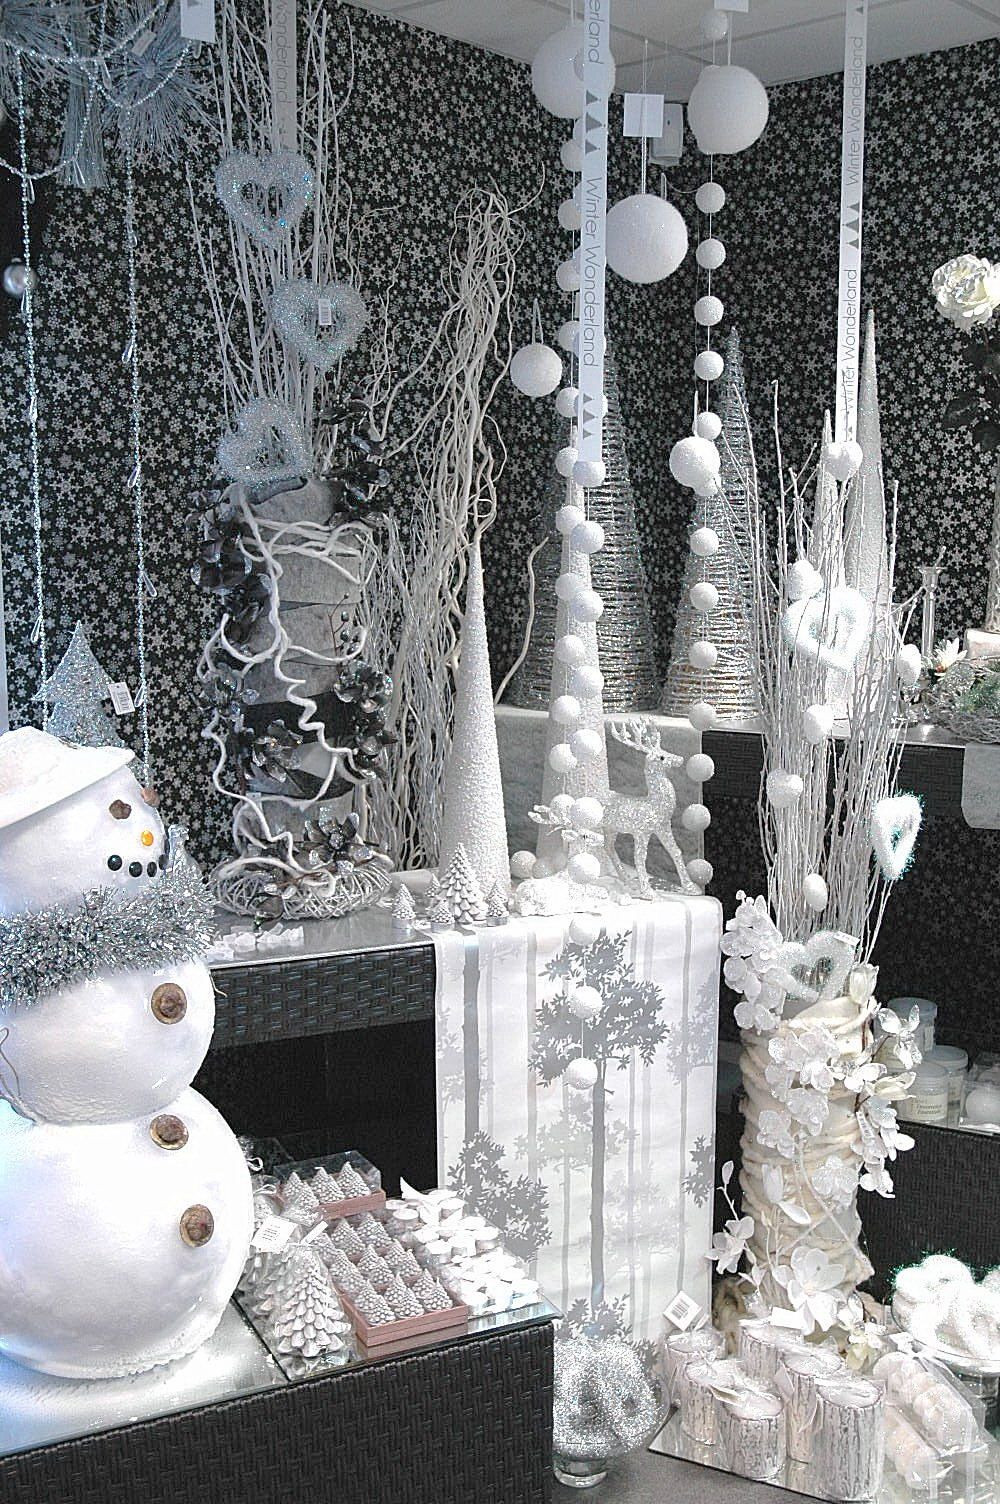 Winter Wonderland Decoration Ideas
 A Winter Wonderland display similar to elf and white